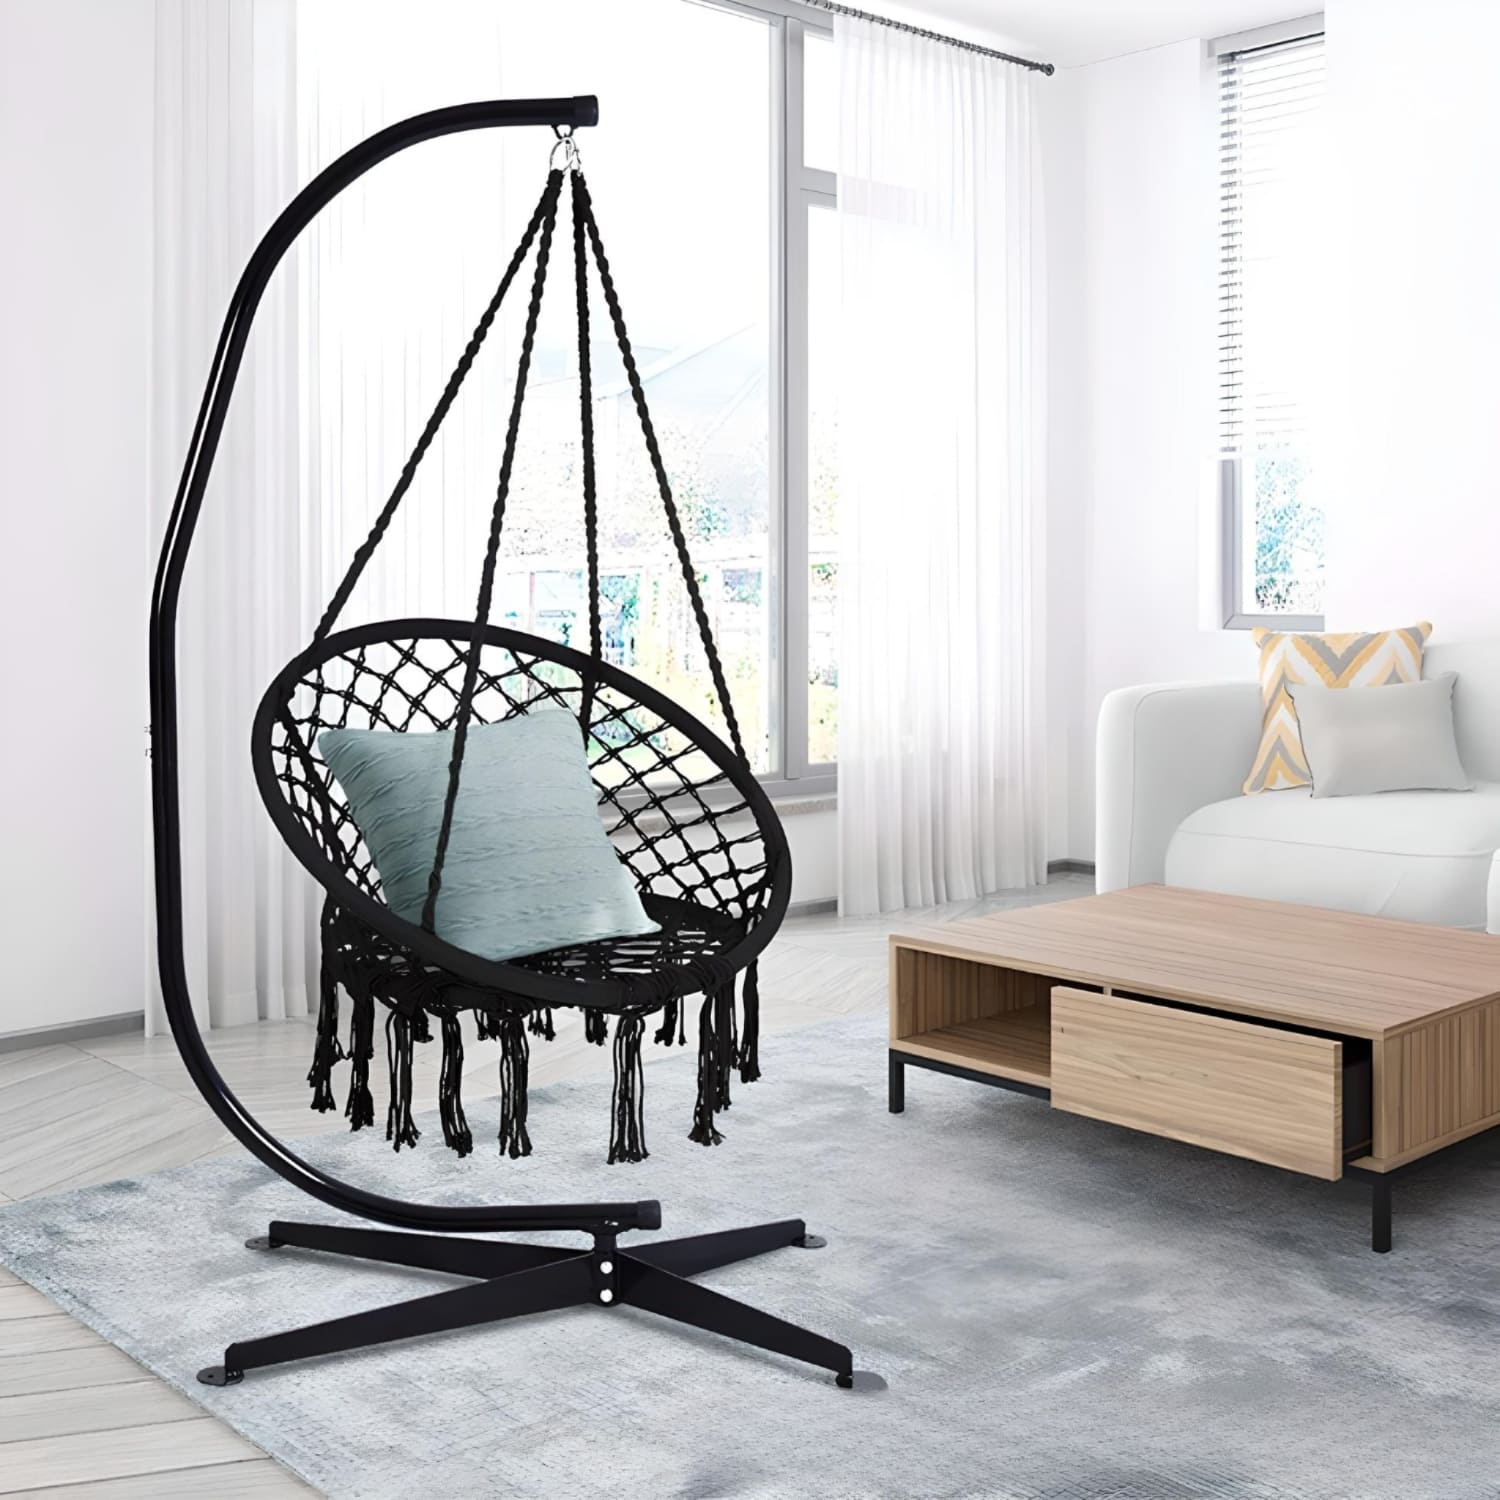 free-standing-hammock-in-design